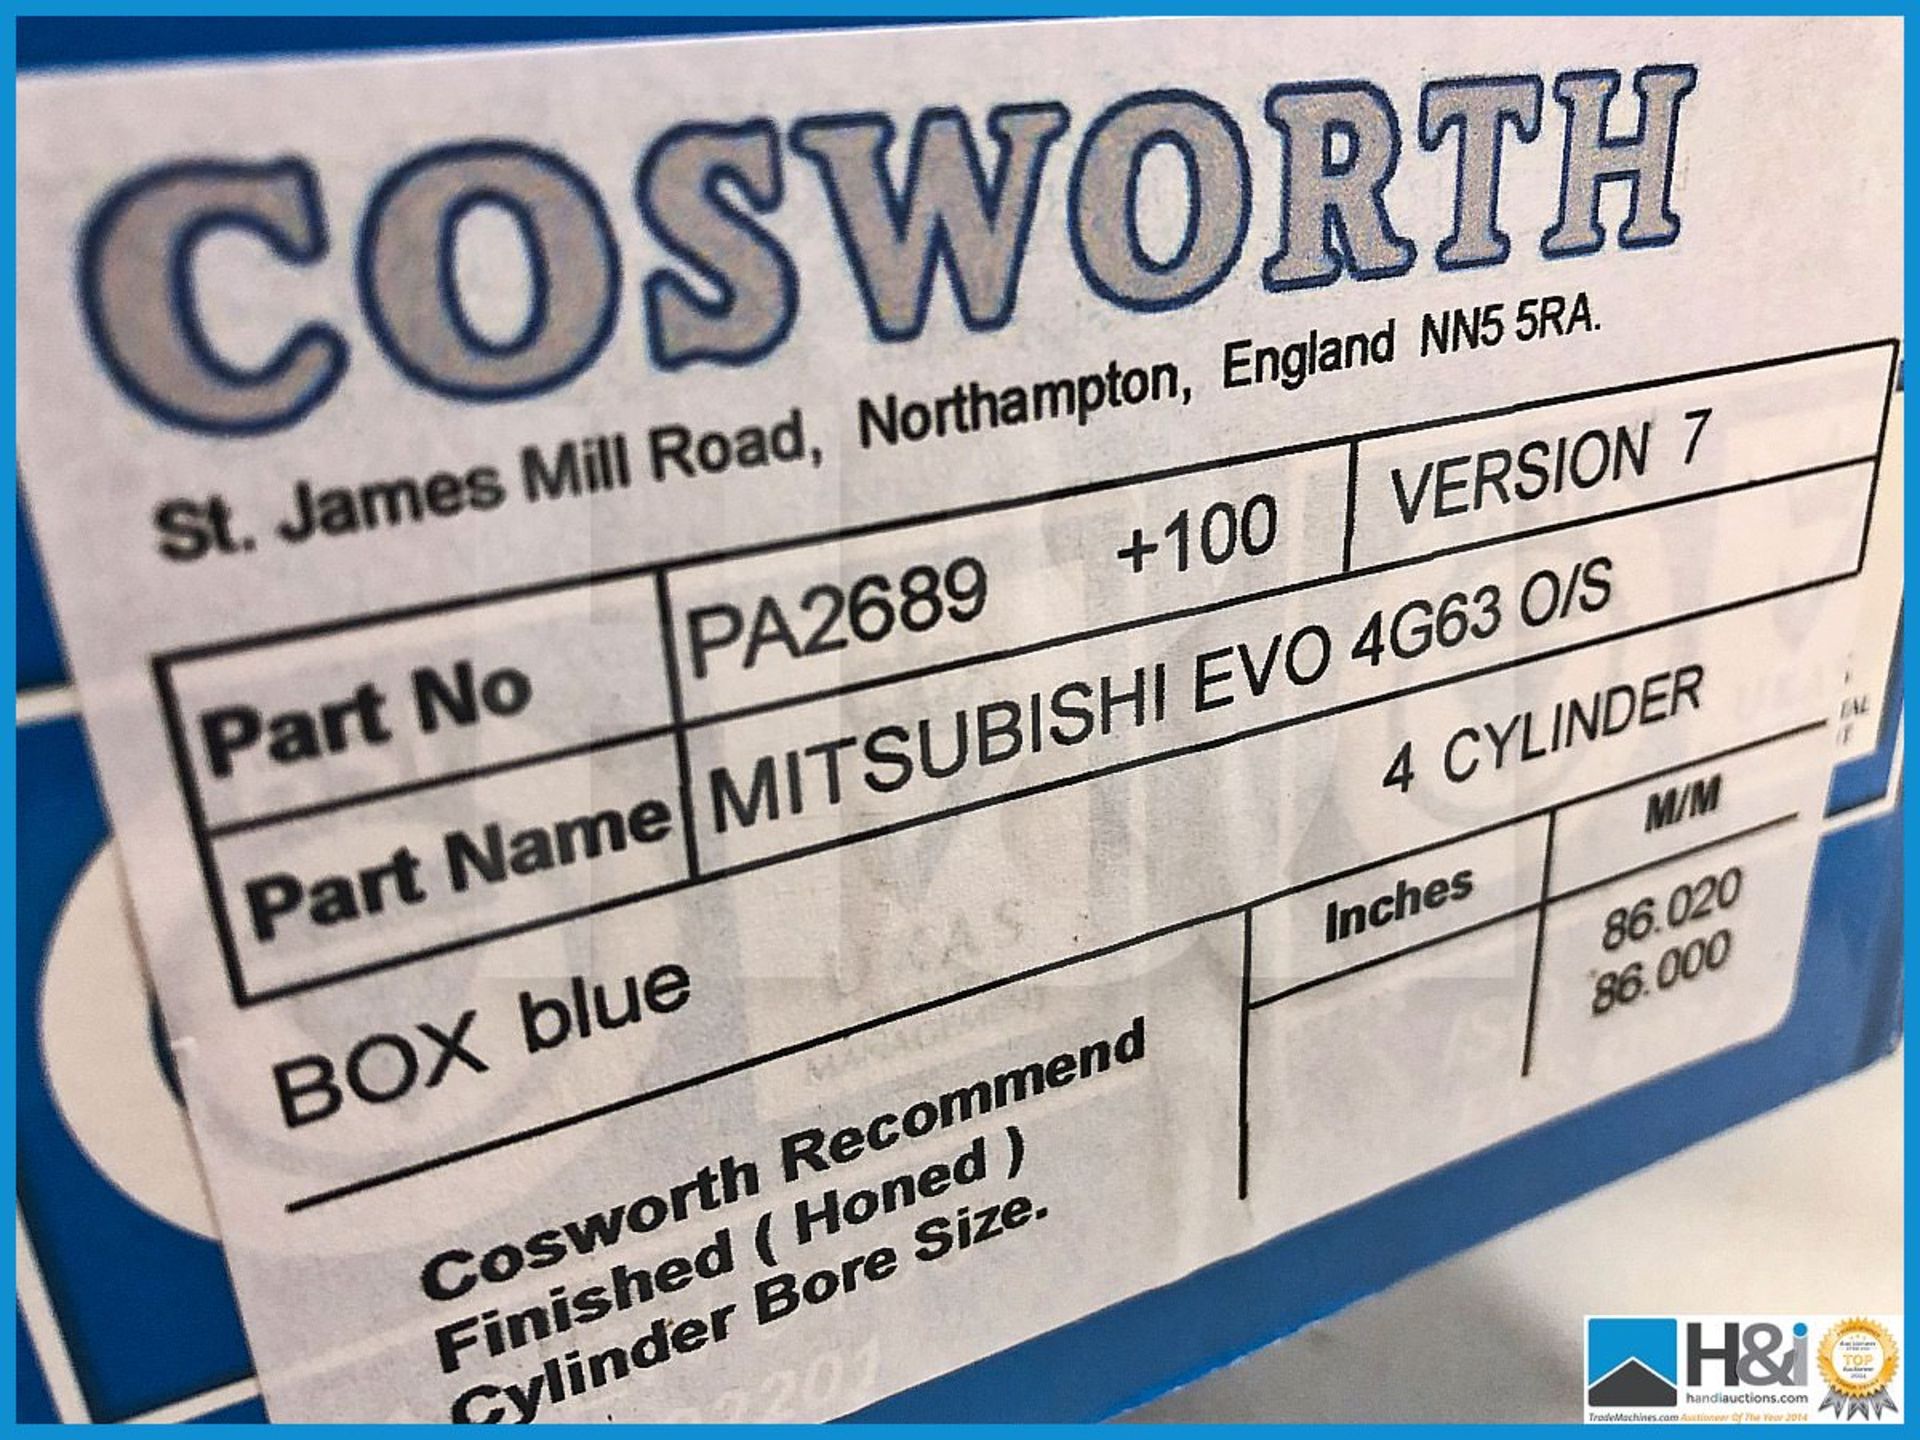 1 x Cosworth piston set (4) for Mitsubishi Evo 4G63. Code: 10001450 - Image 3 of 3